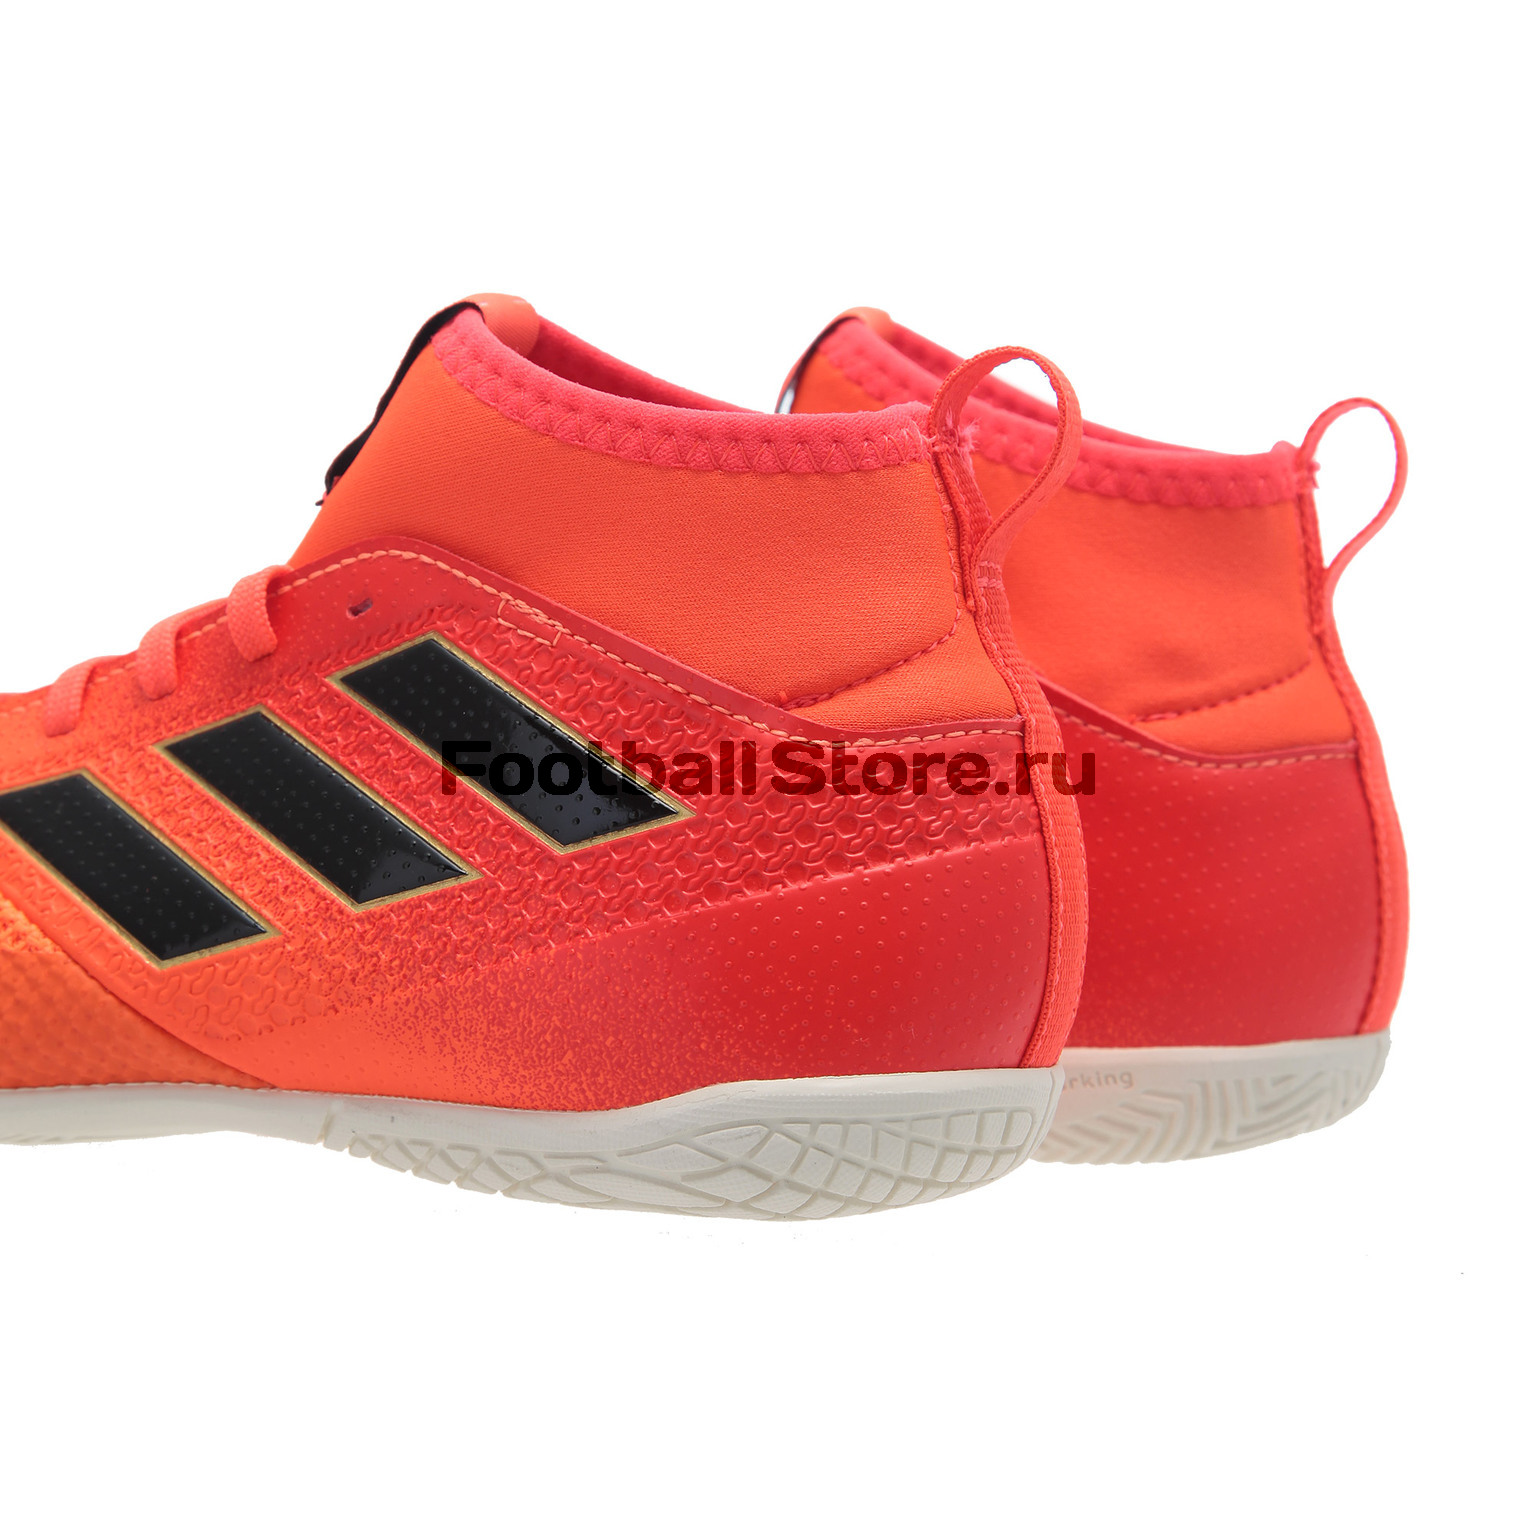 Футзалки детские Adidas Ace Tango 17.3 IN CG3714